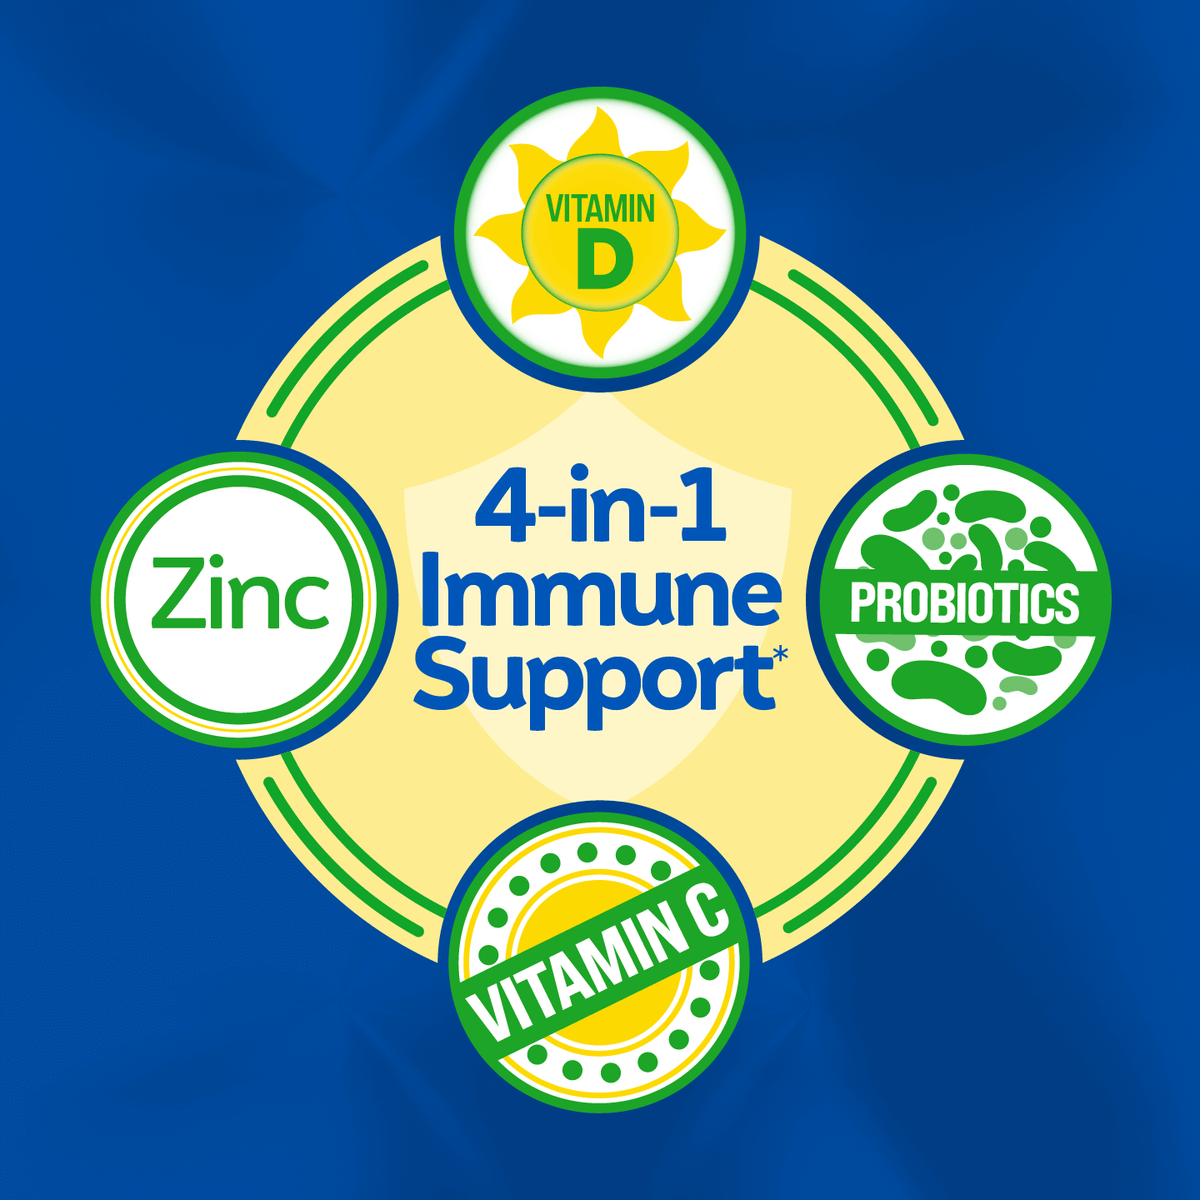 icon showing vitamin D, Zinc, Probiotics, Vitiman C for 4-in-1 immune support